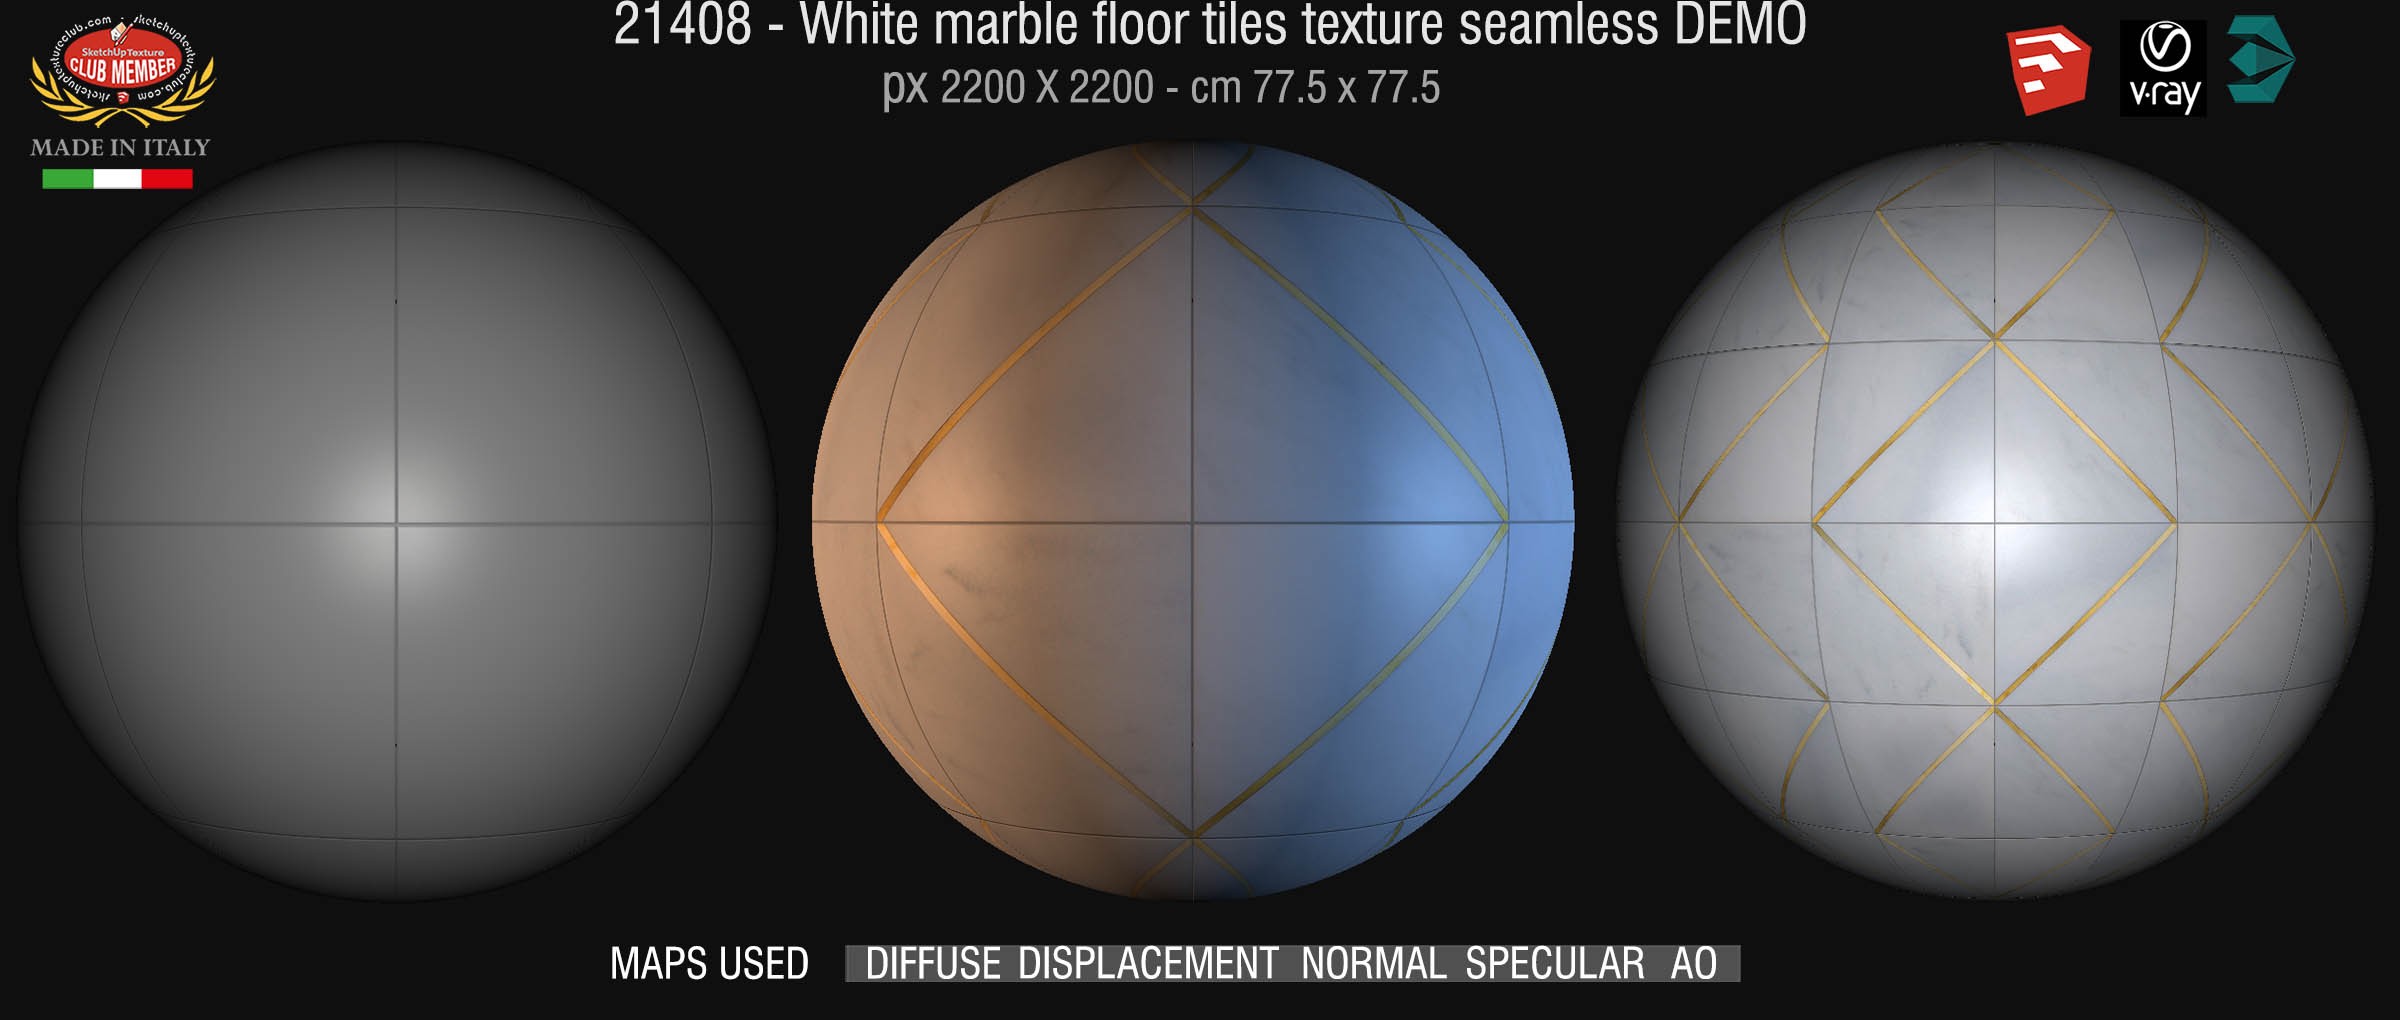 21408 white marble floor tiles texture seamless + maps DEMO